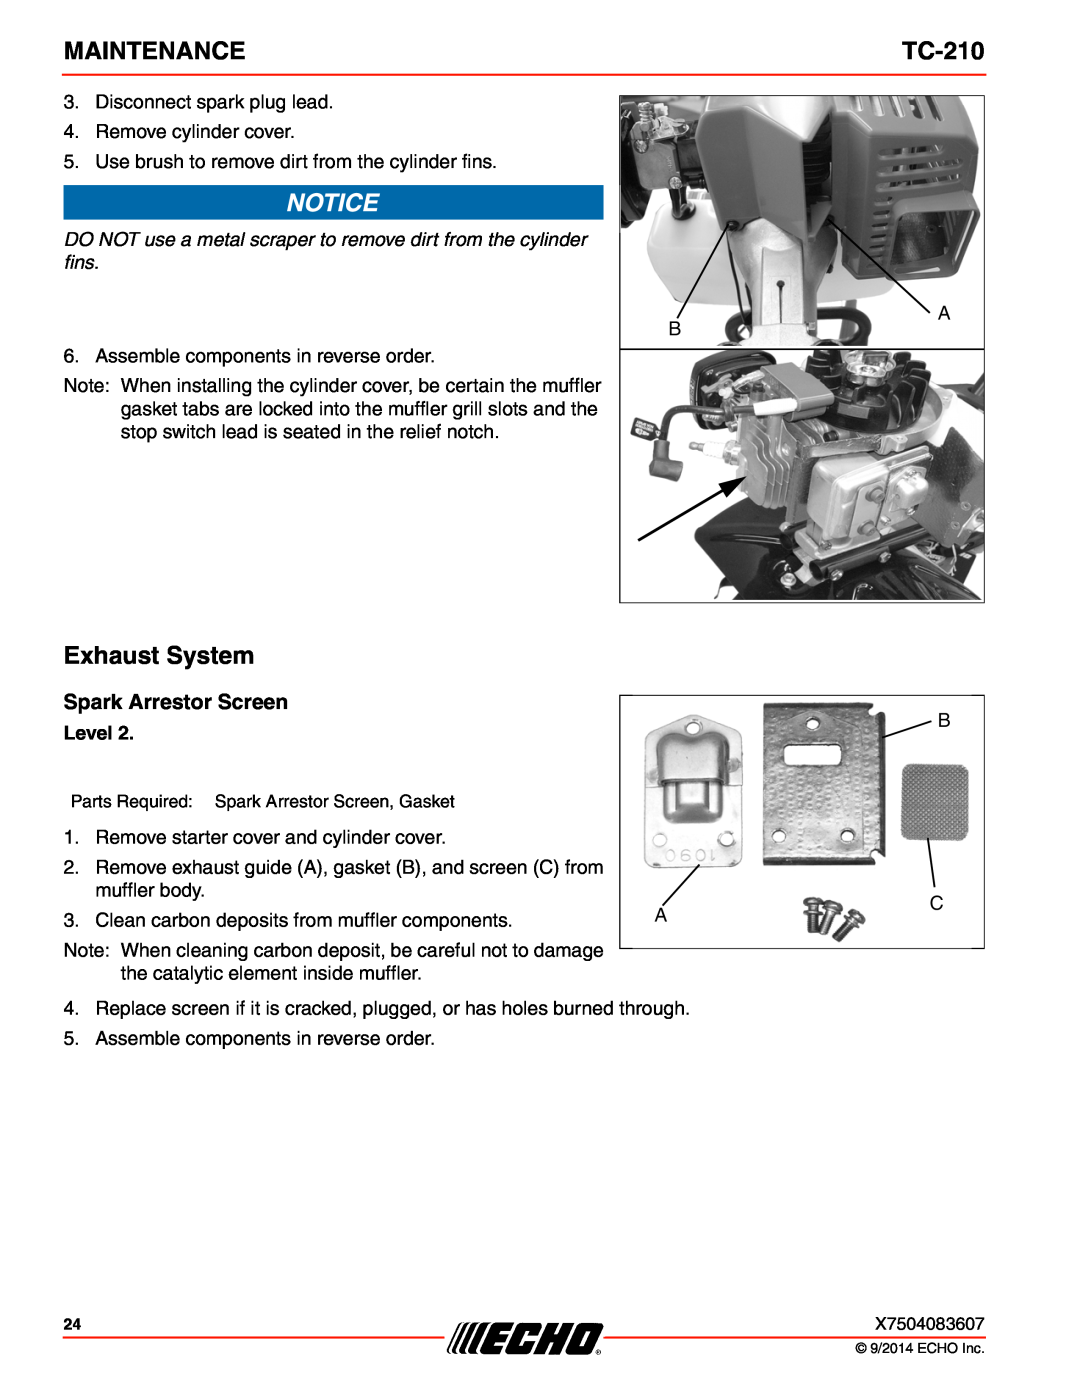 Echo TC-210 specifications Exhaust System, Spark Arrestor Screen, Maintenance 